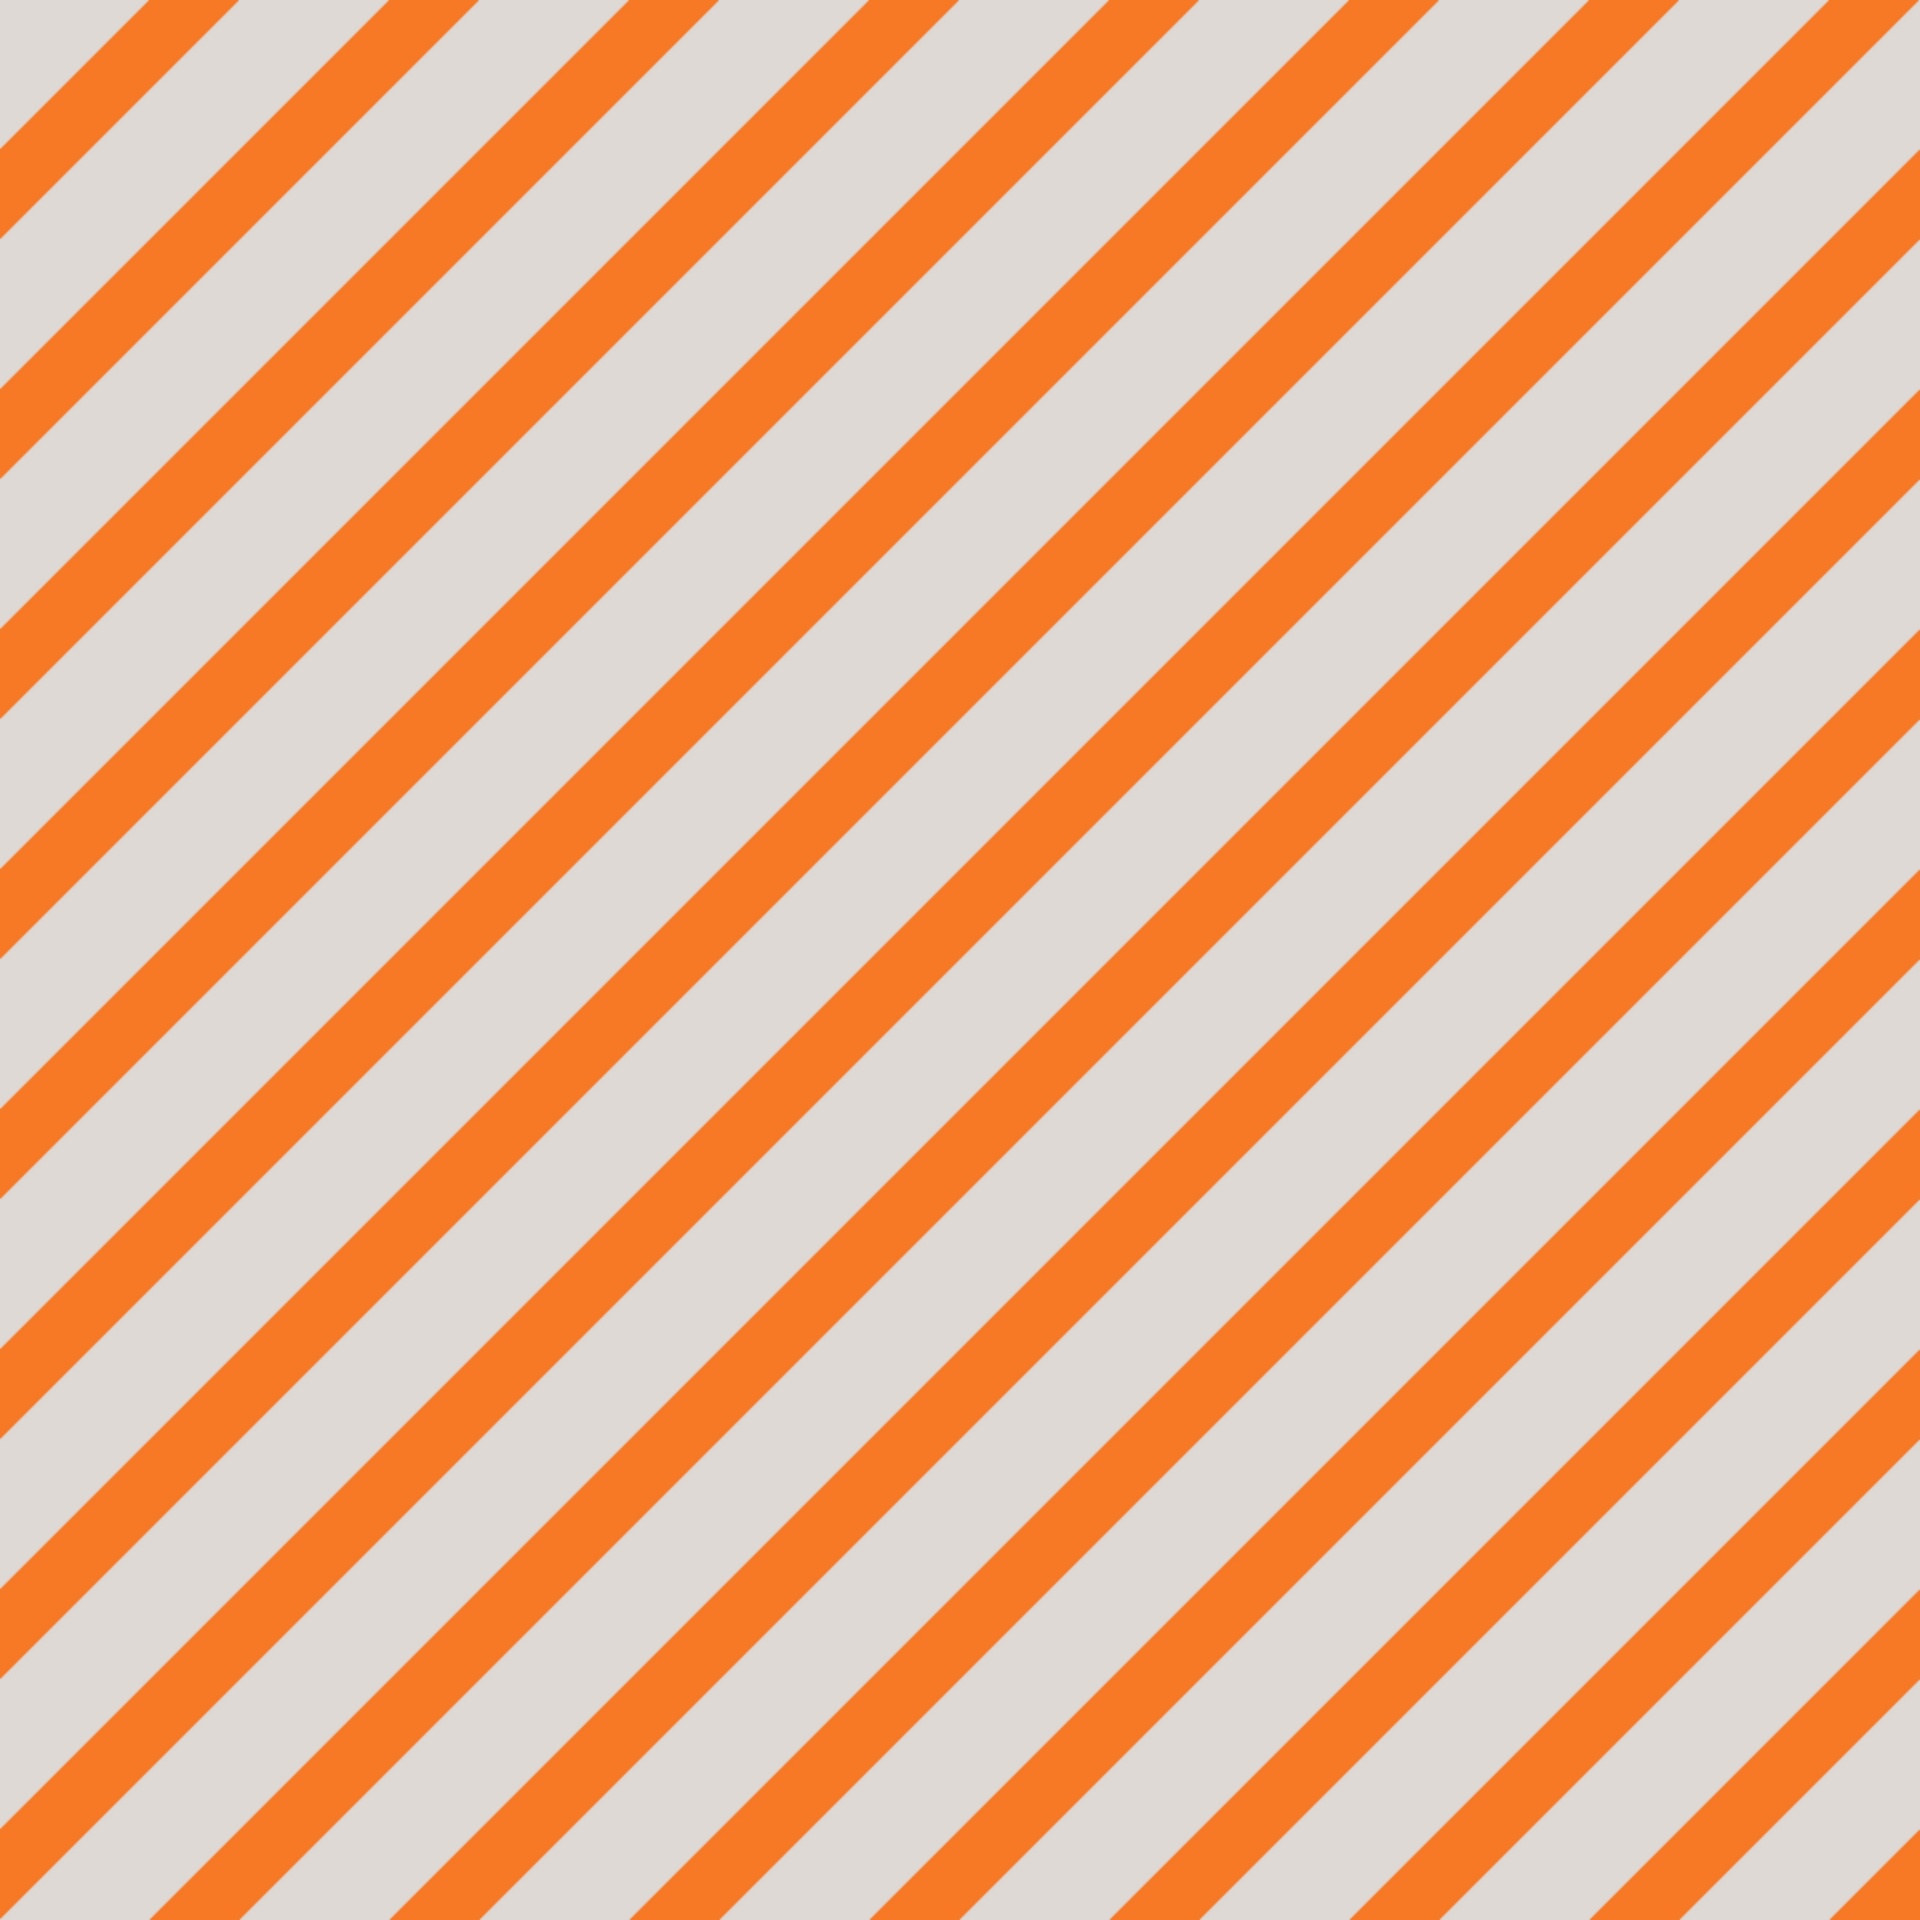 Yellow And White Diagonal Stripes Pattern Royalty-Free Stock Image